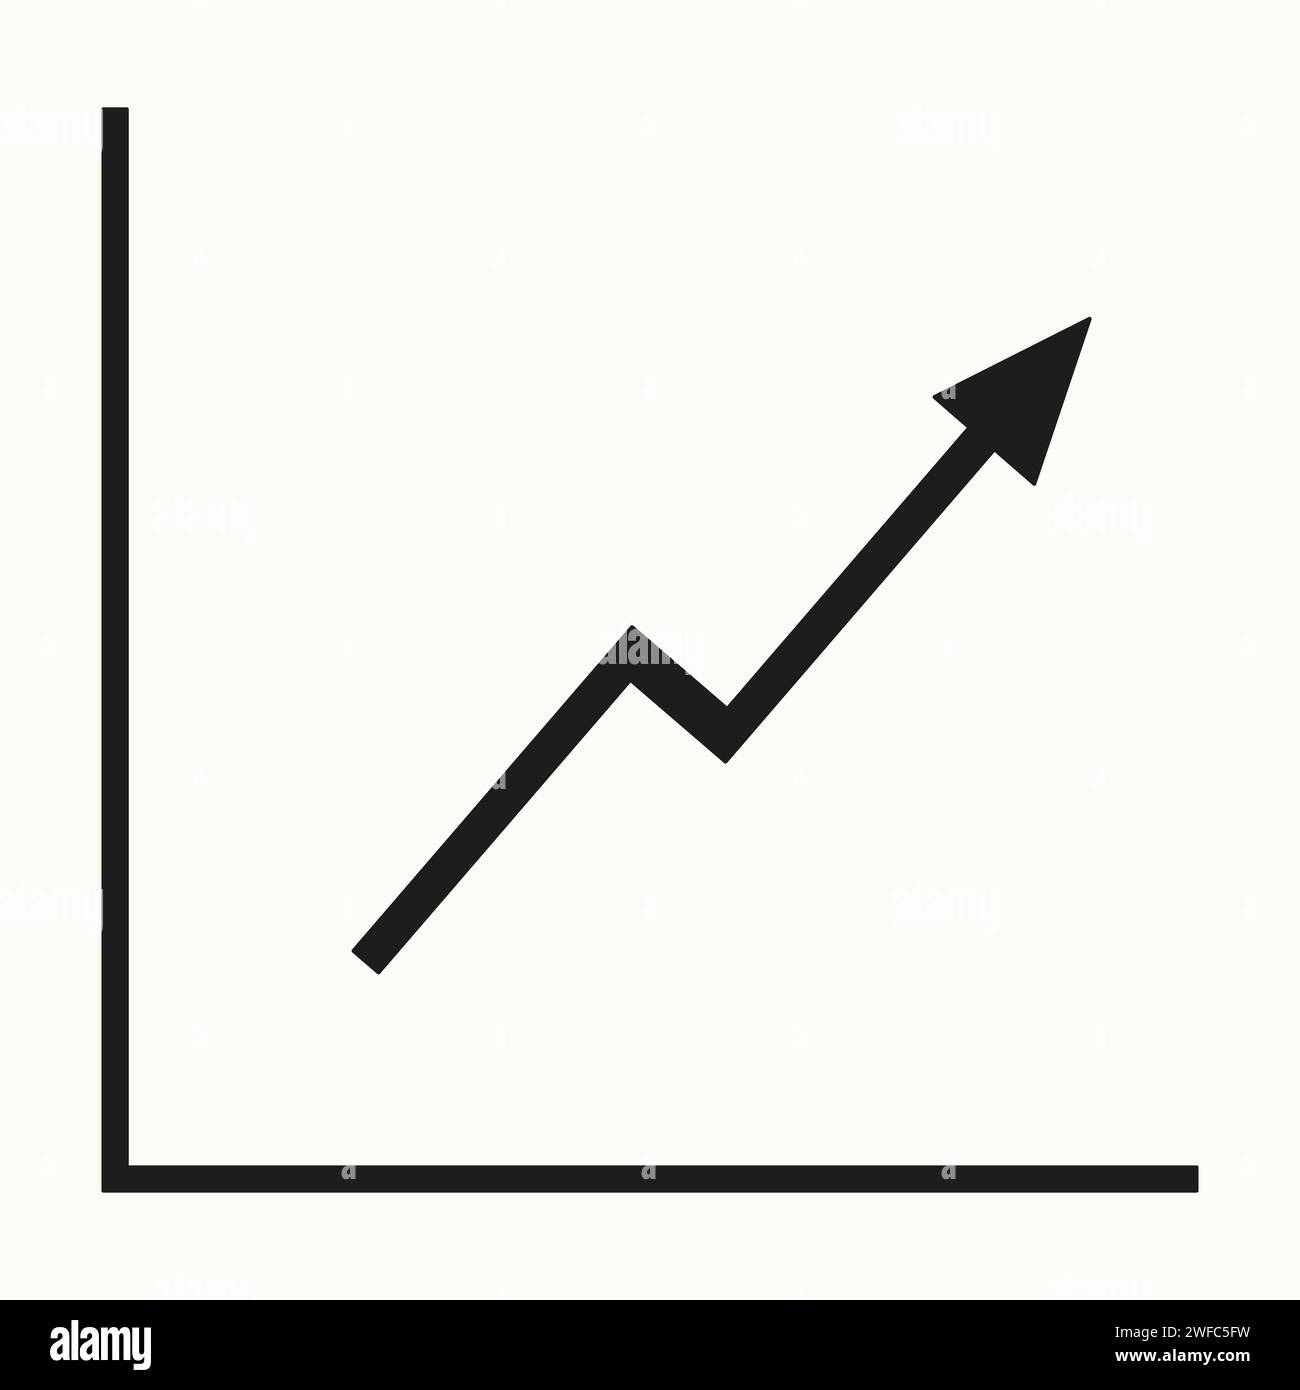 Black zig zag arrow up. Timeline scale. Business background. Financial concept. Vector illustration. Stock image. EPS 10. Stock Vector